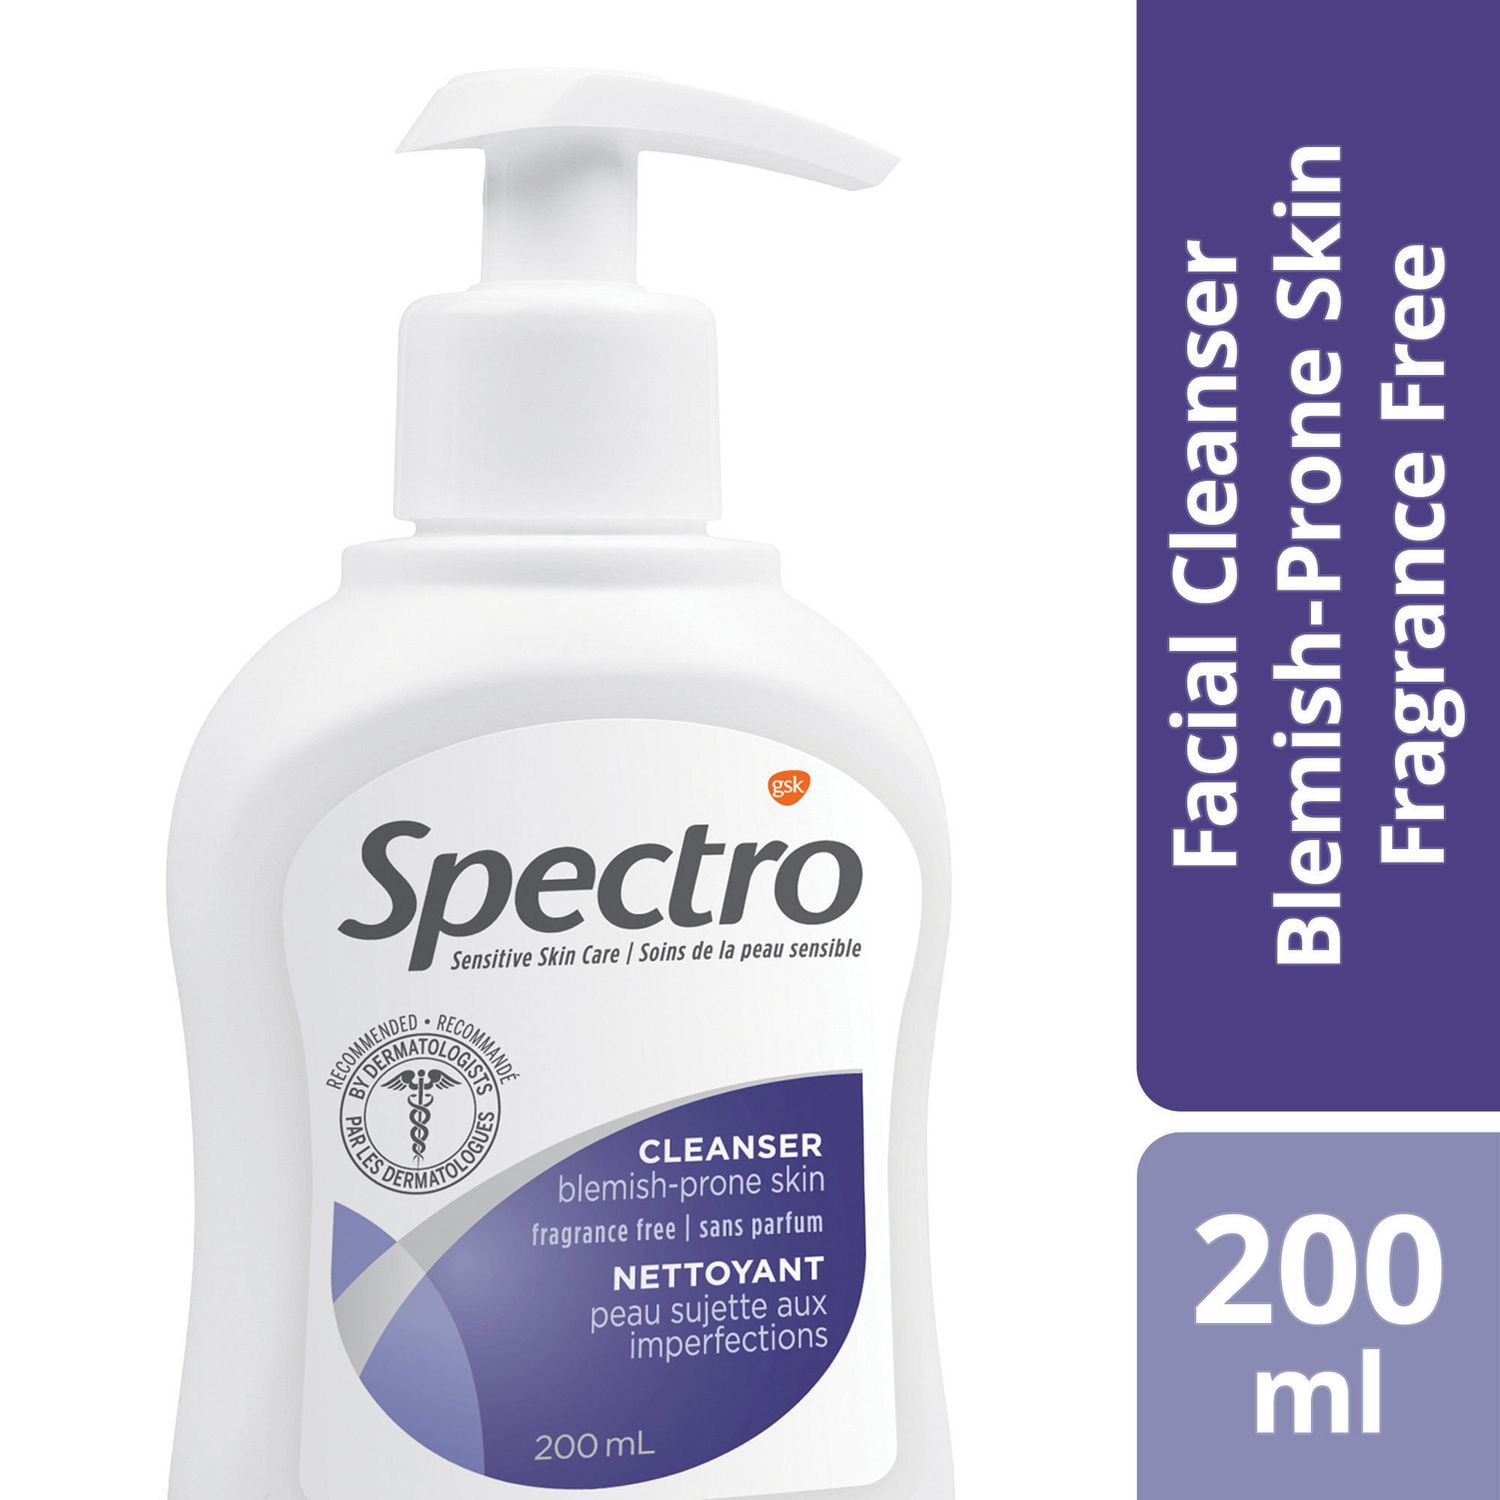 Skincare, New Spectro Cleanser Blemish Prone Sensitive Skin Fragrance Free  20ml